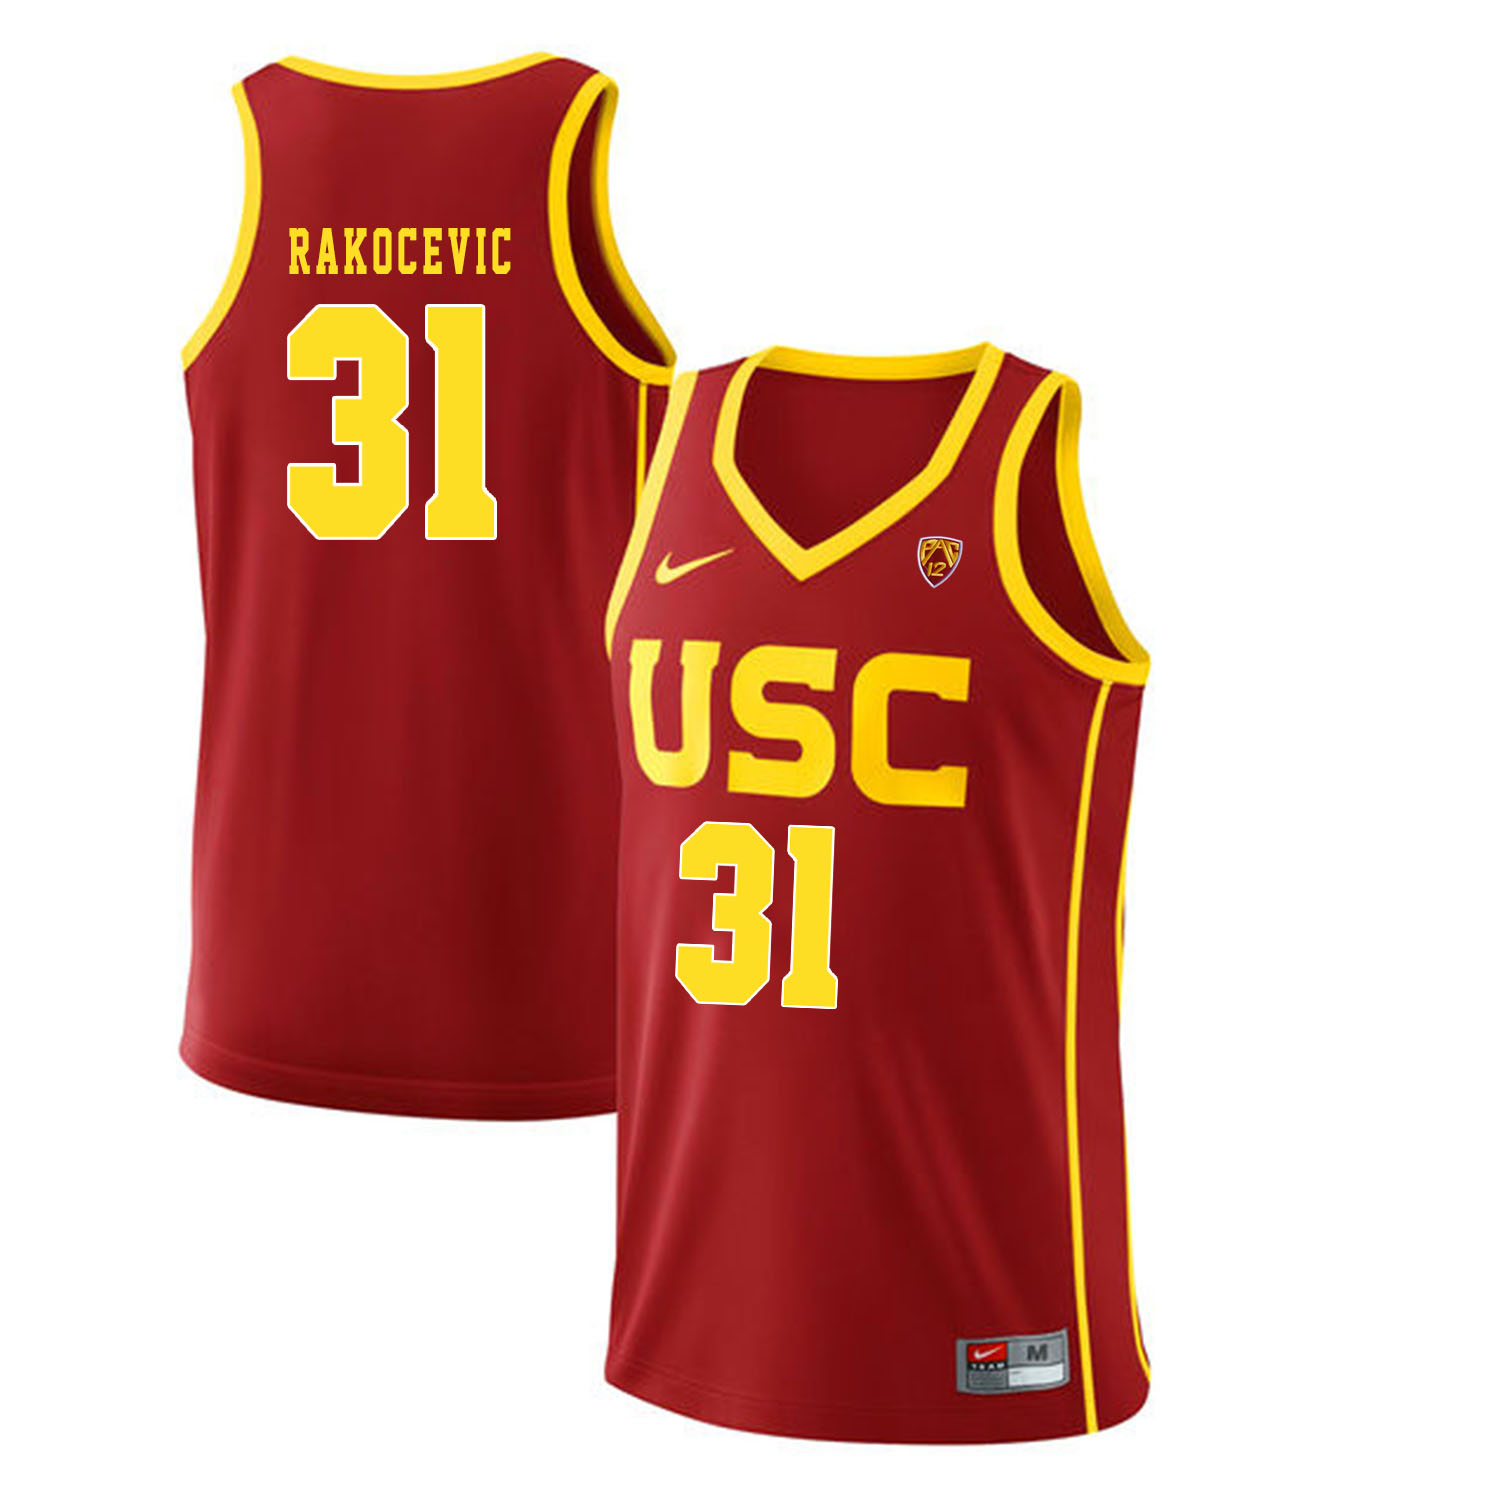 USC Trojans 31 Nick Rakocevic Red College Basketball Jersey